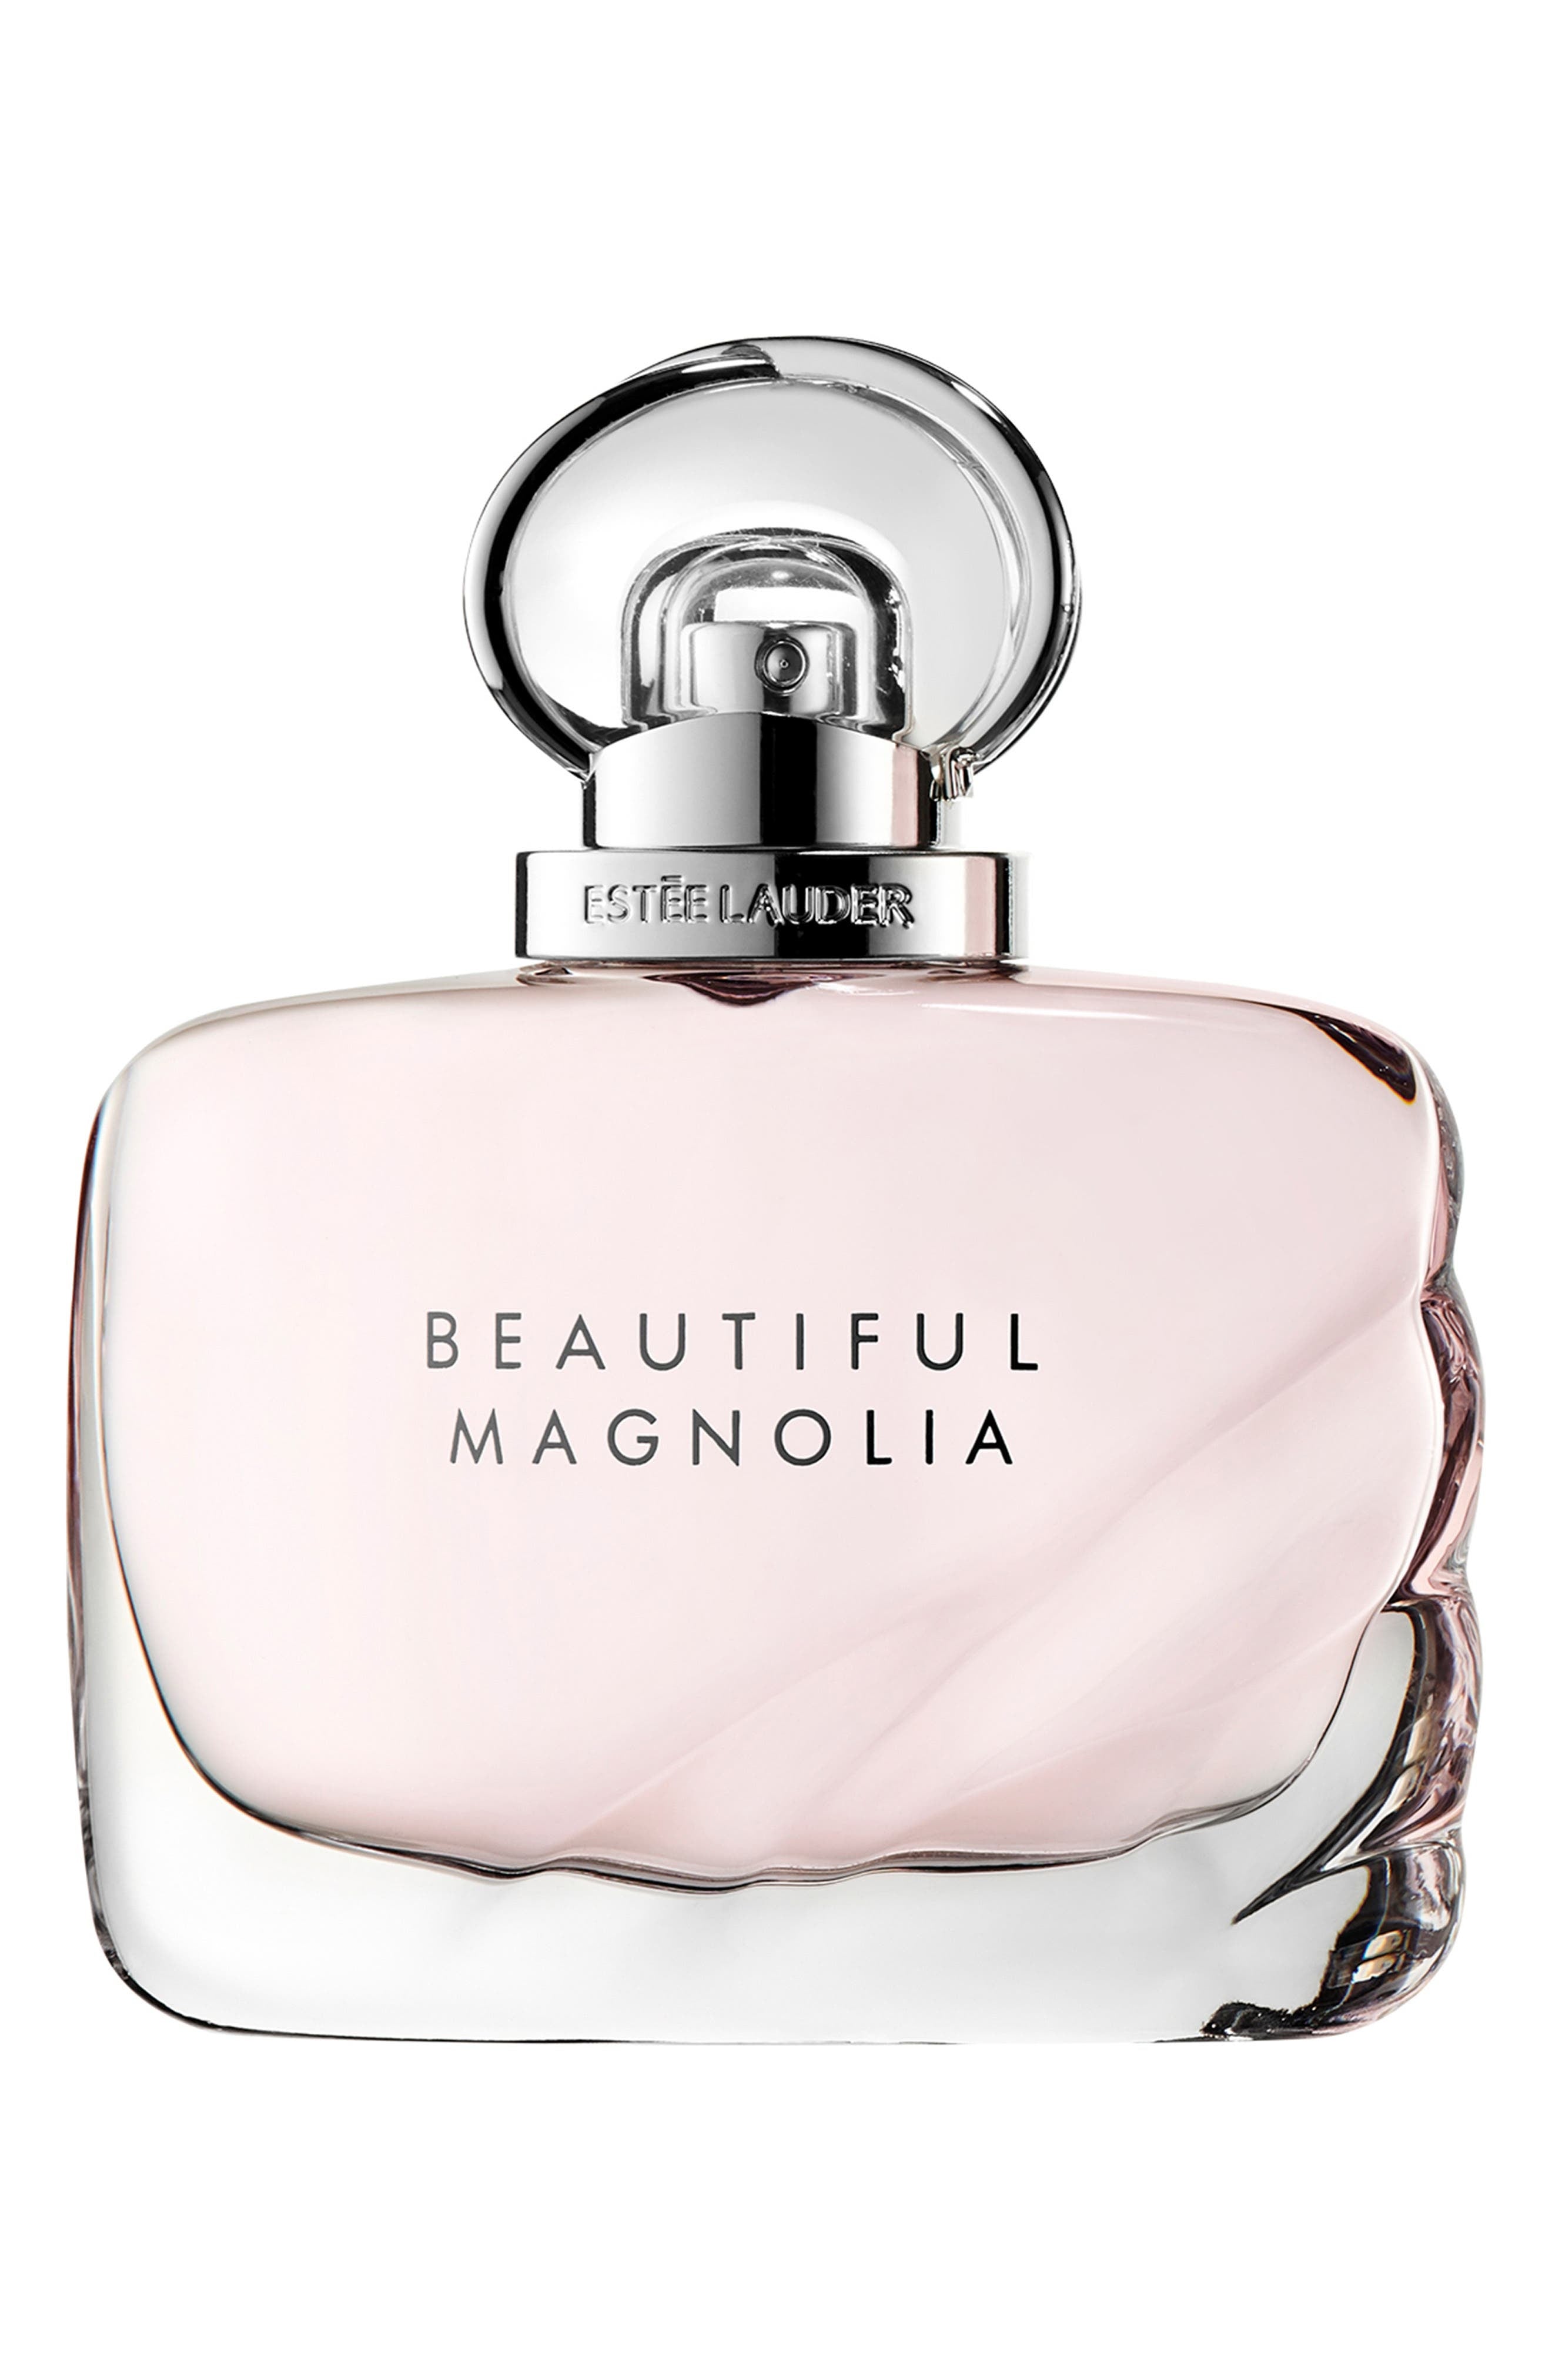 Estee Lauder Beautiful Magnolia Eau de Parfum Spray, 1.7 oz / 50 ml